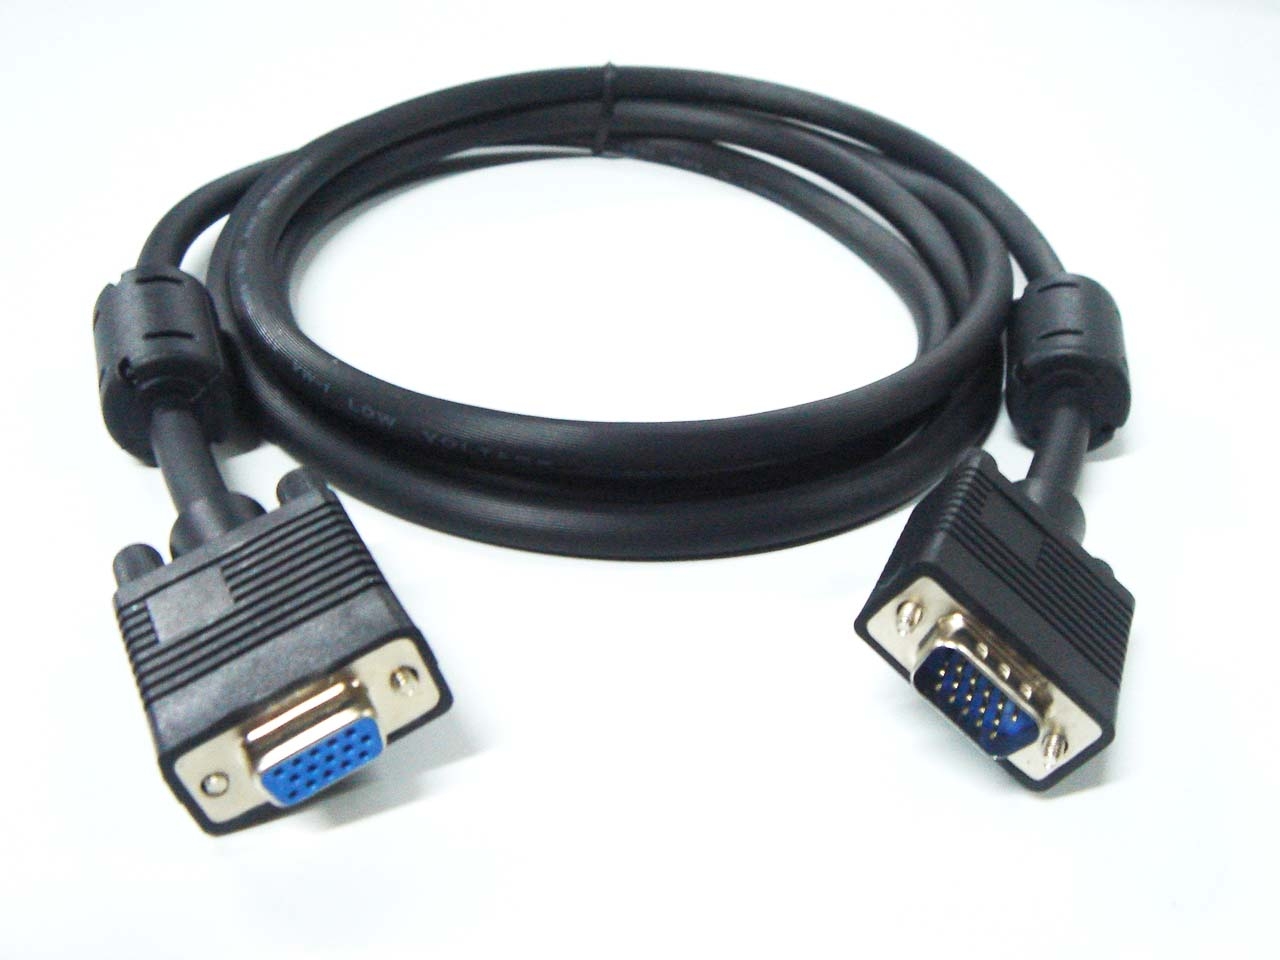 Передача с ноутбука на телевизор. Кабель для монитора к компьютеру VGA HDMI. Кабель для монитора к компьютеру VGA DVI. ВГА шнур от монитора к компьютеру. Провод HDMI VGA от компьютера к монитору.